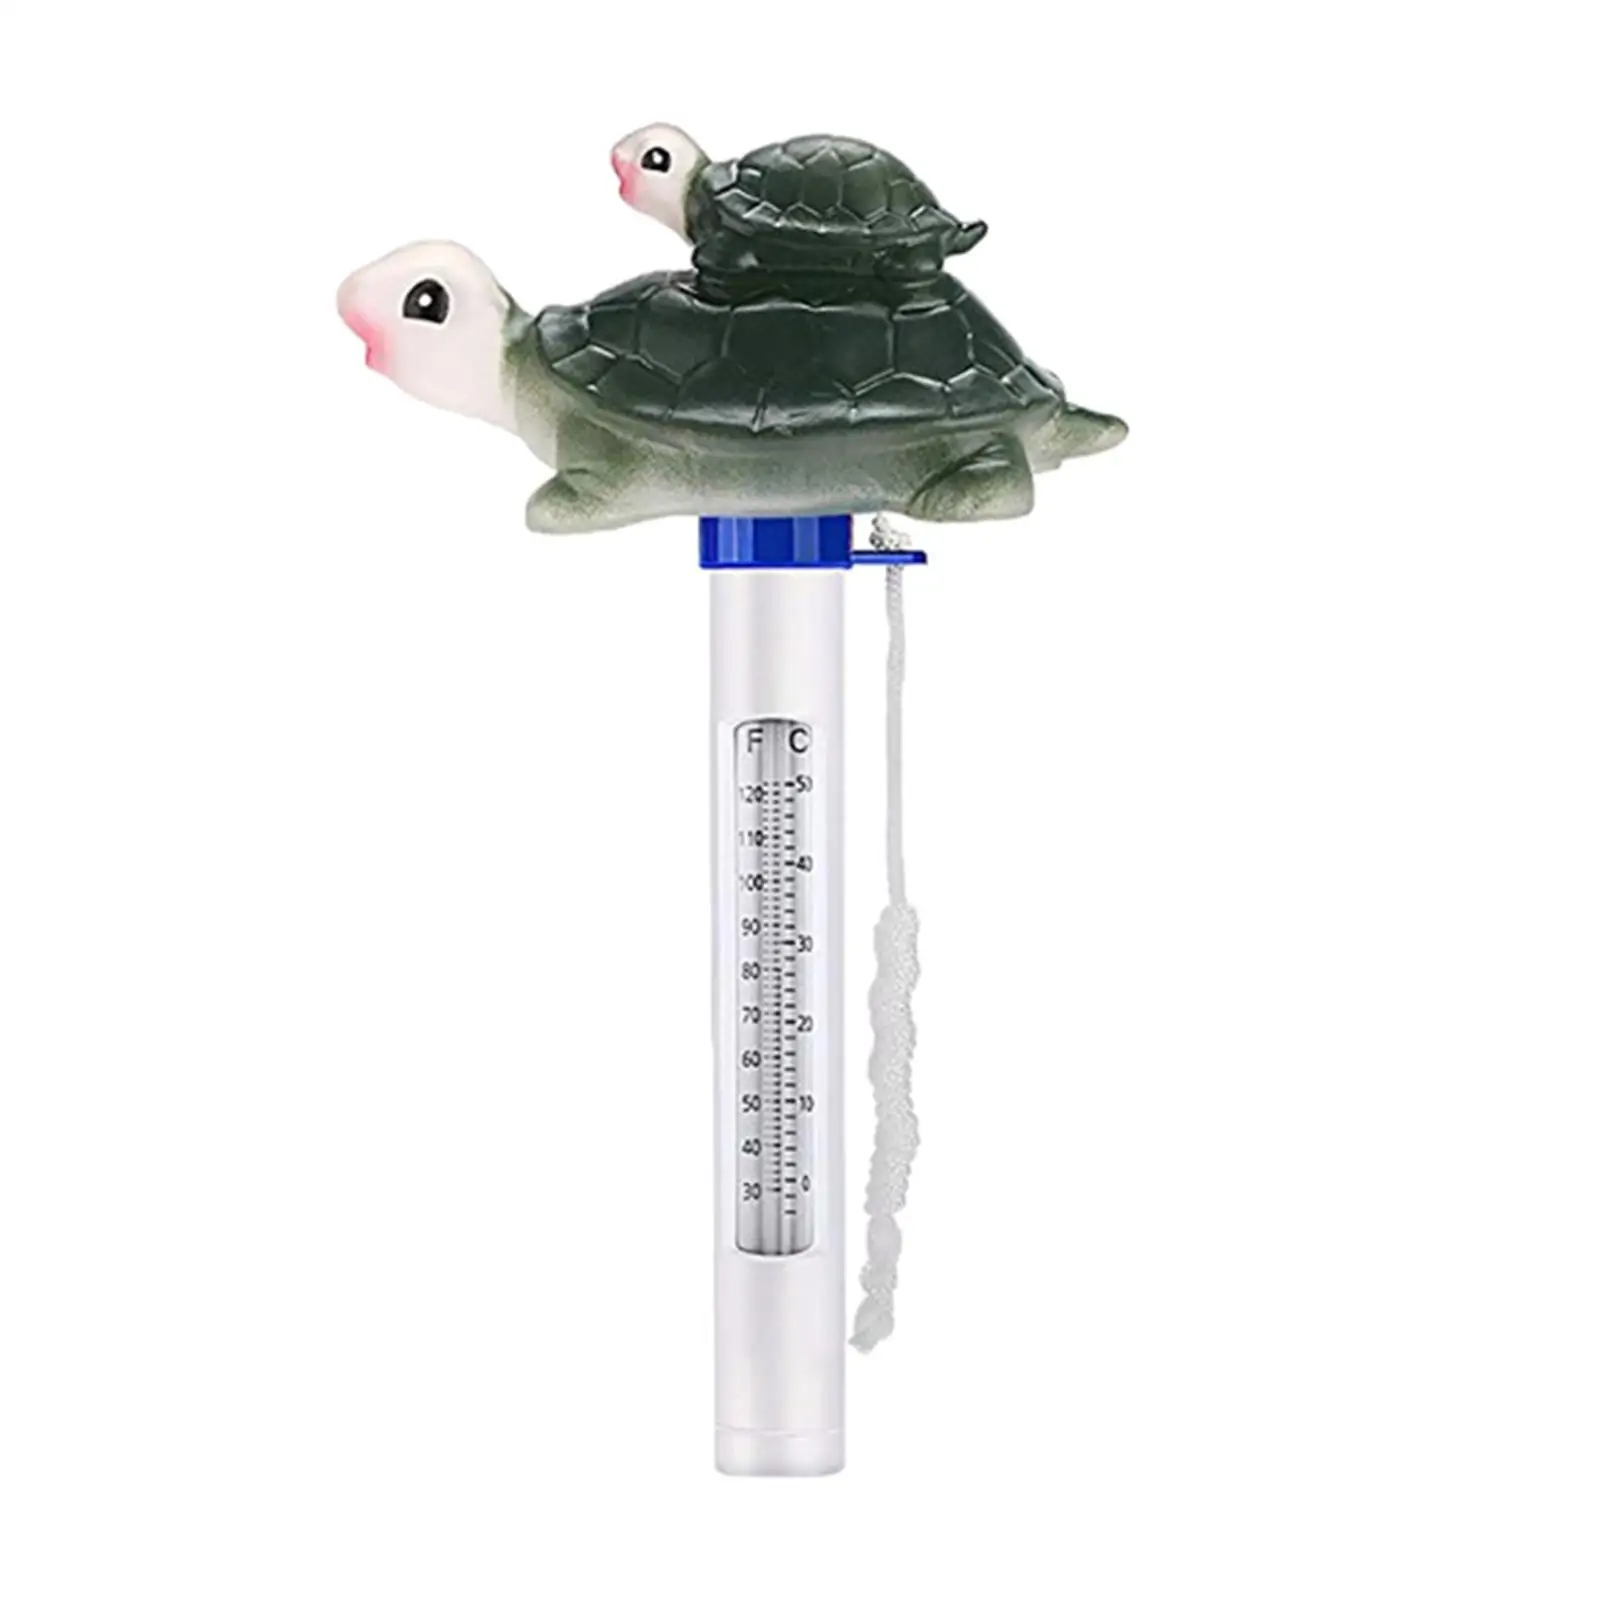 Turtle Floating Pool Thermometer Temperature Gauge C/Outdoor Indoor